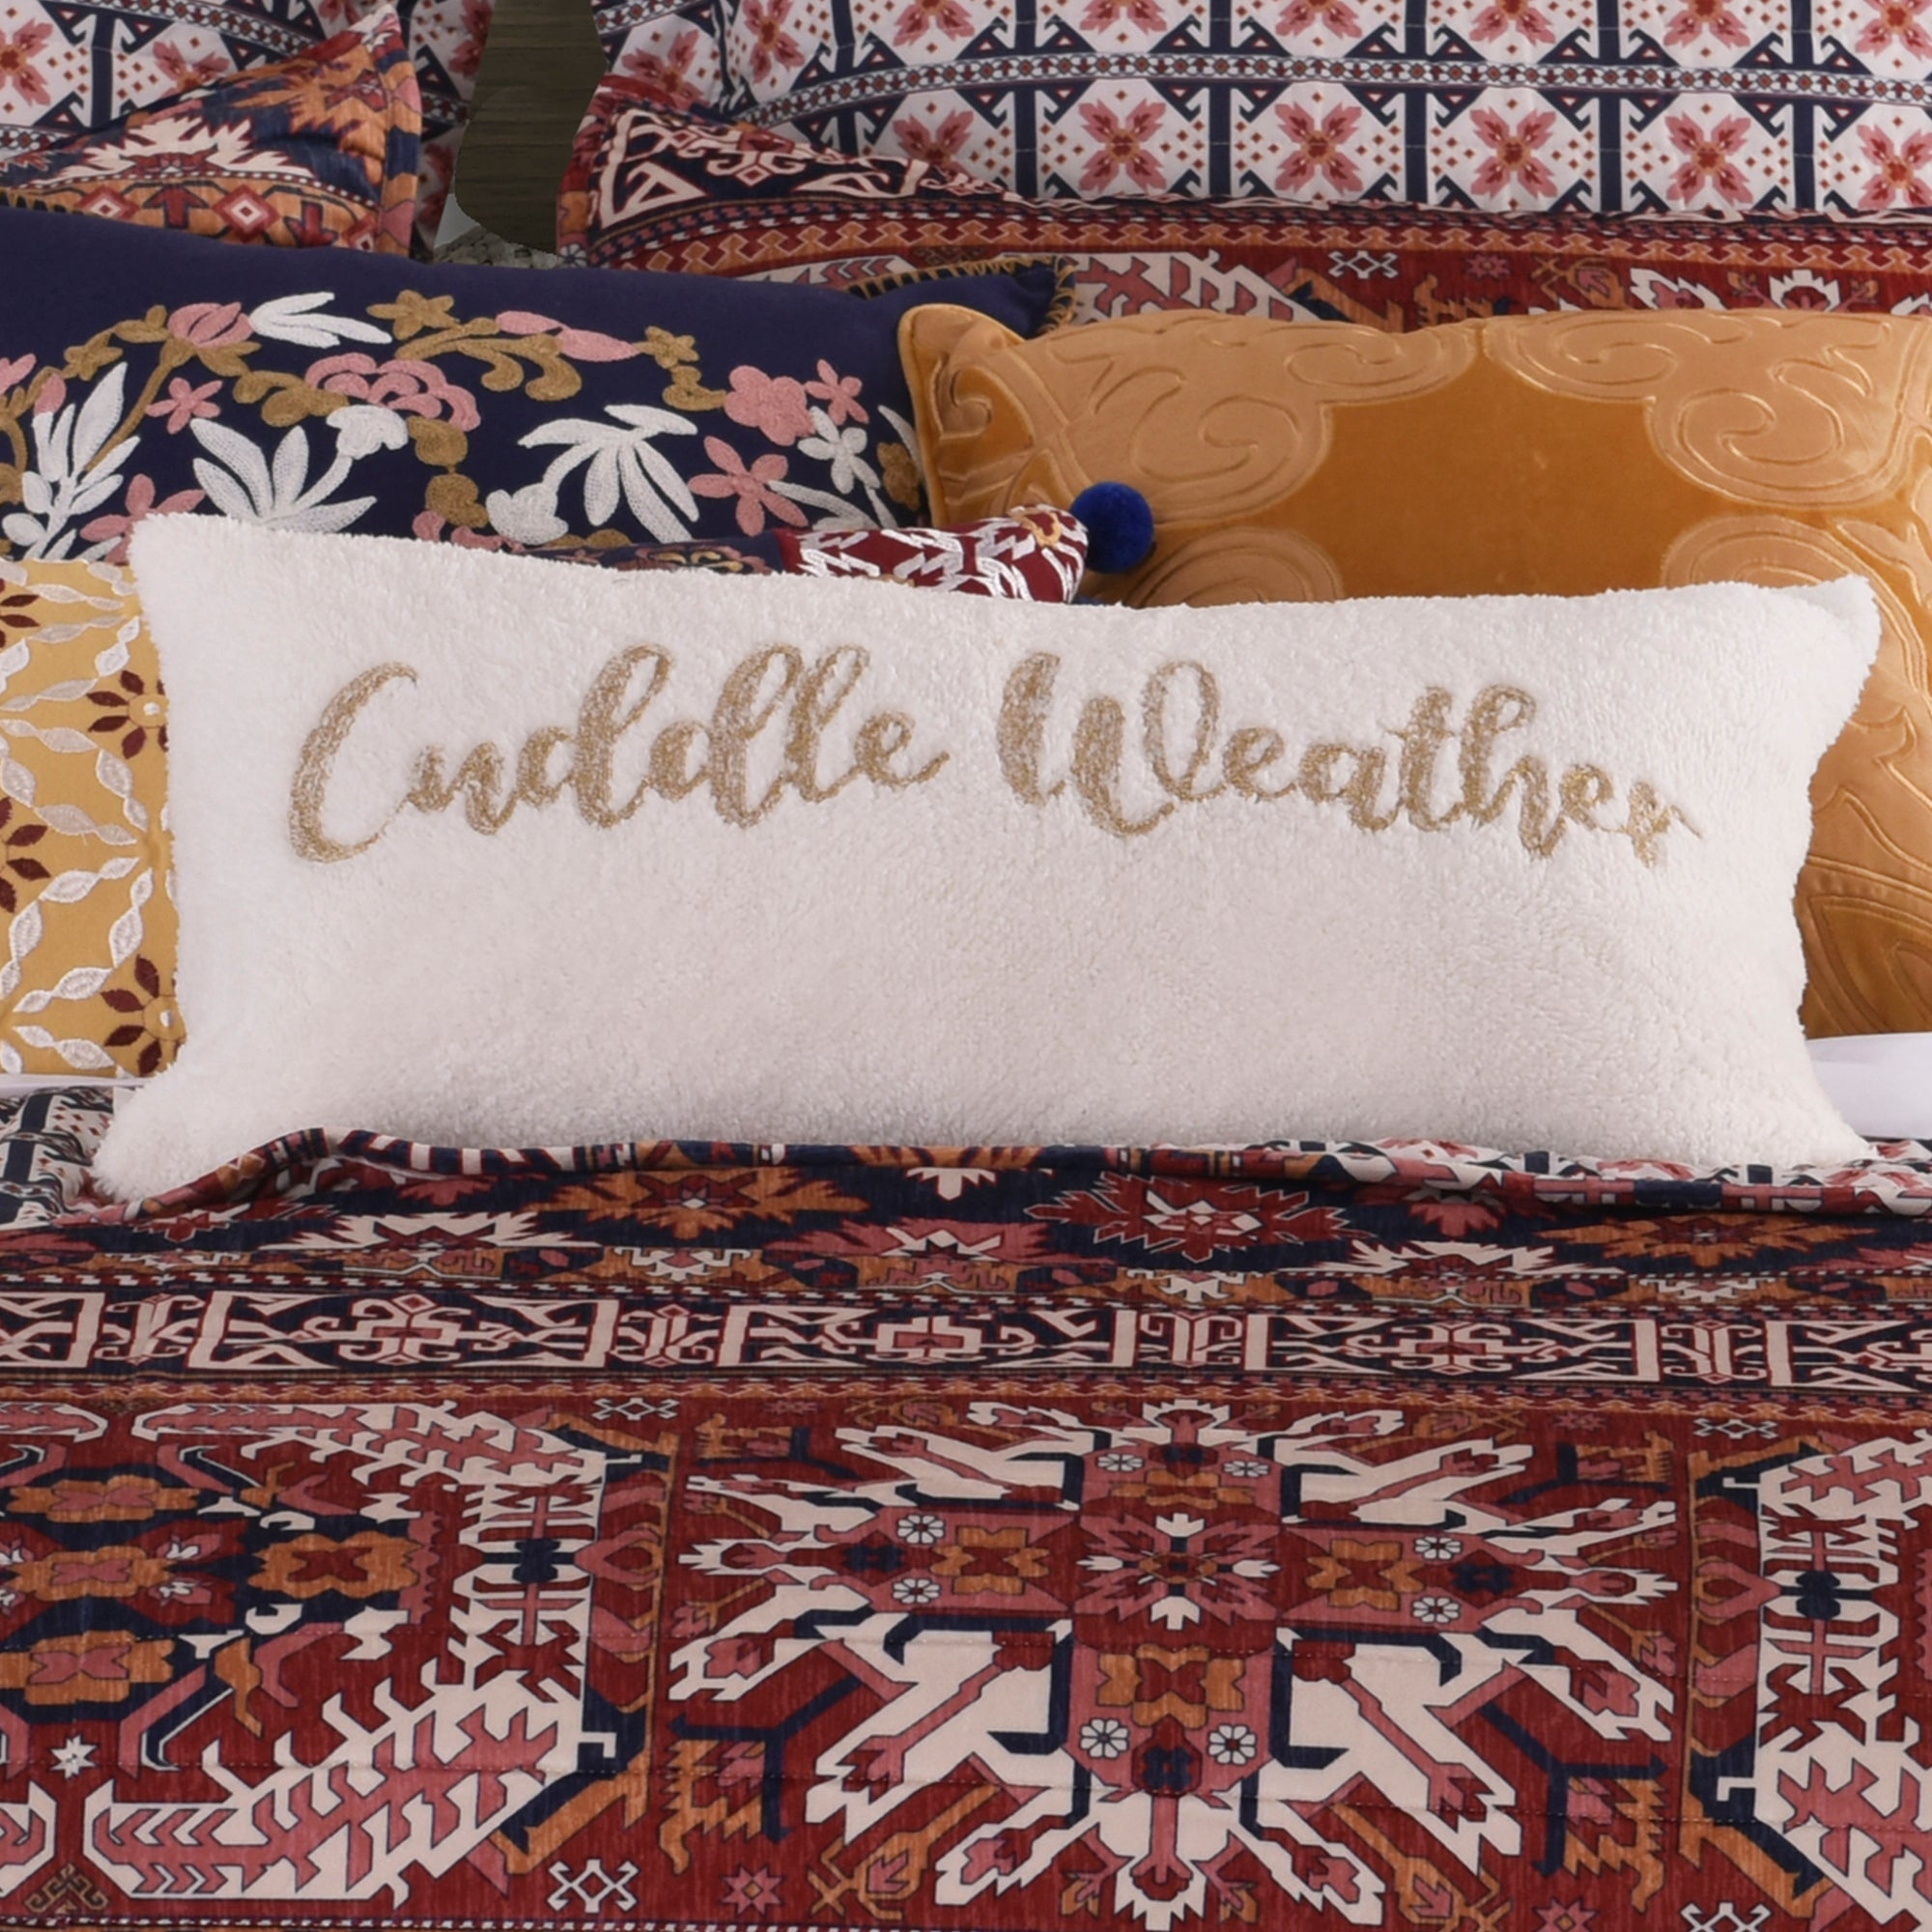 Madera Cuddle Weather Pillow